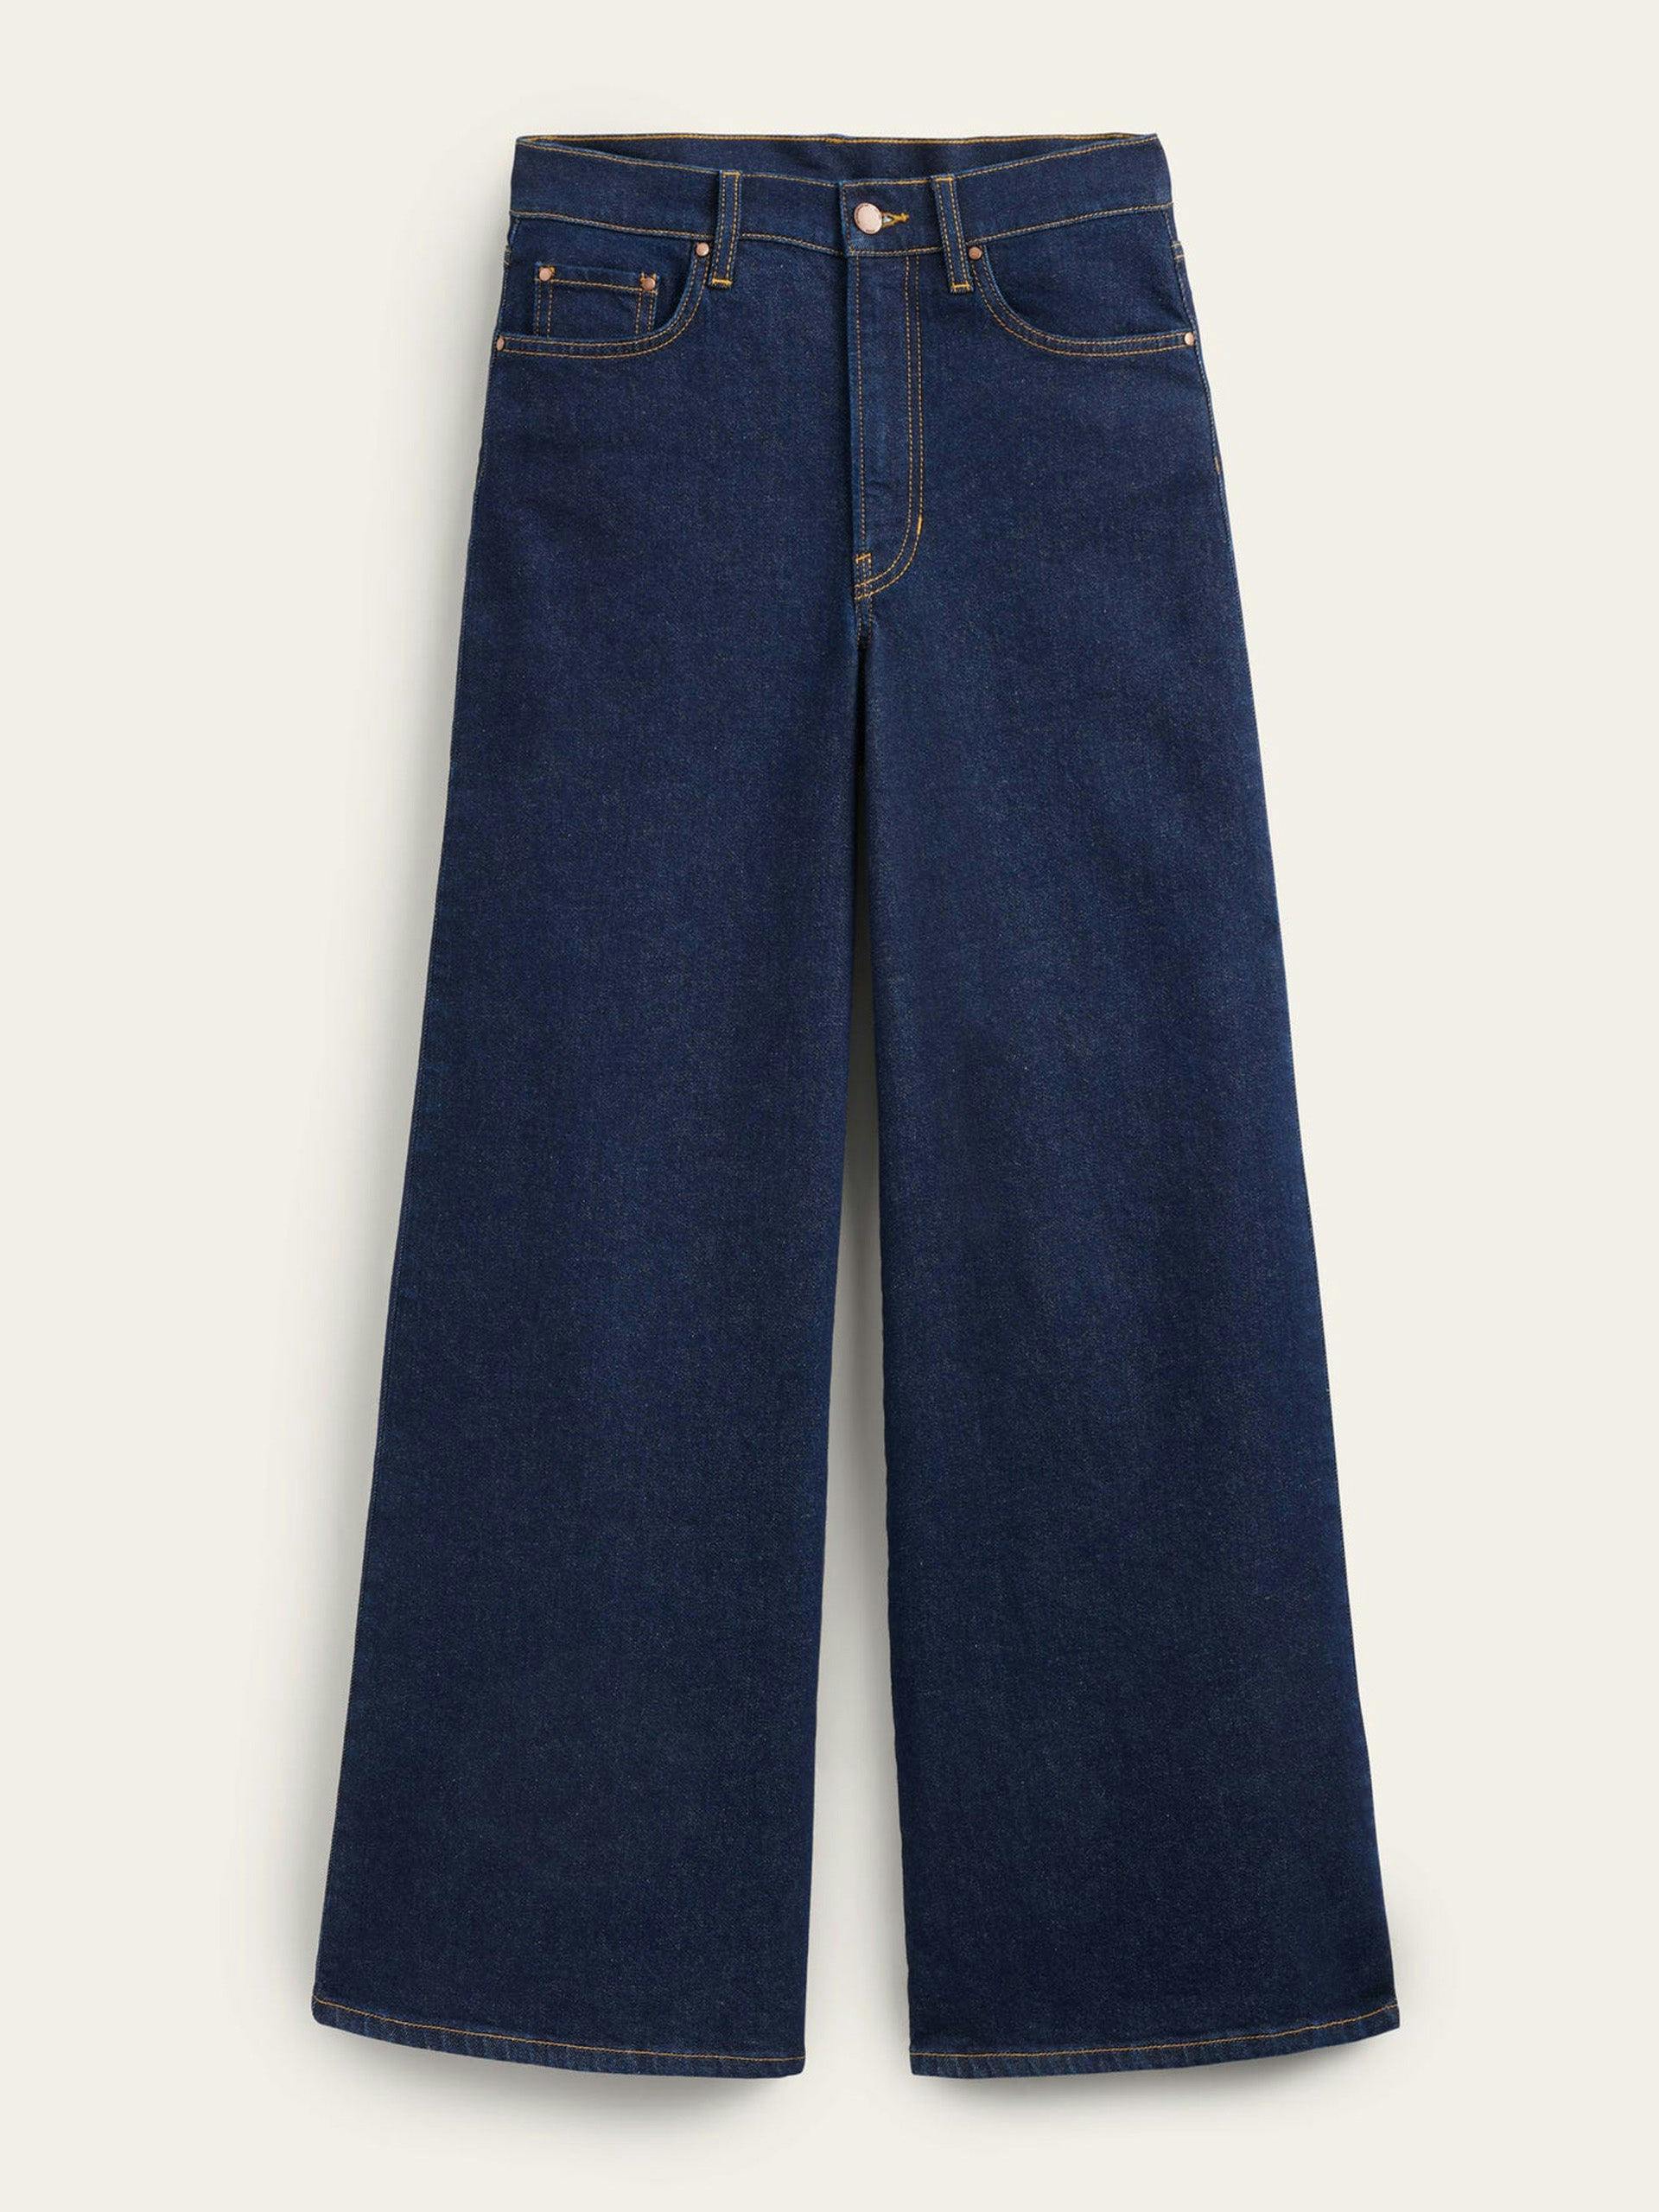 High rise wide leg jeans in Indigo